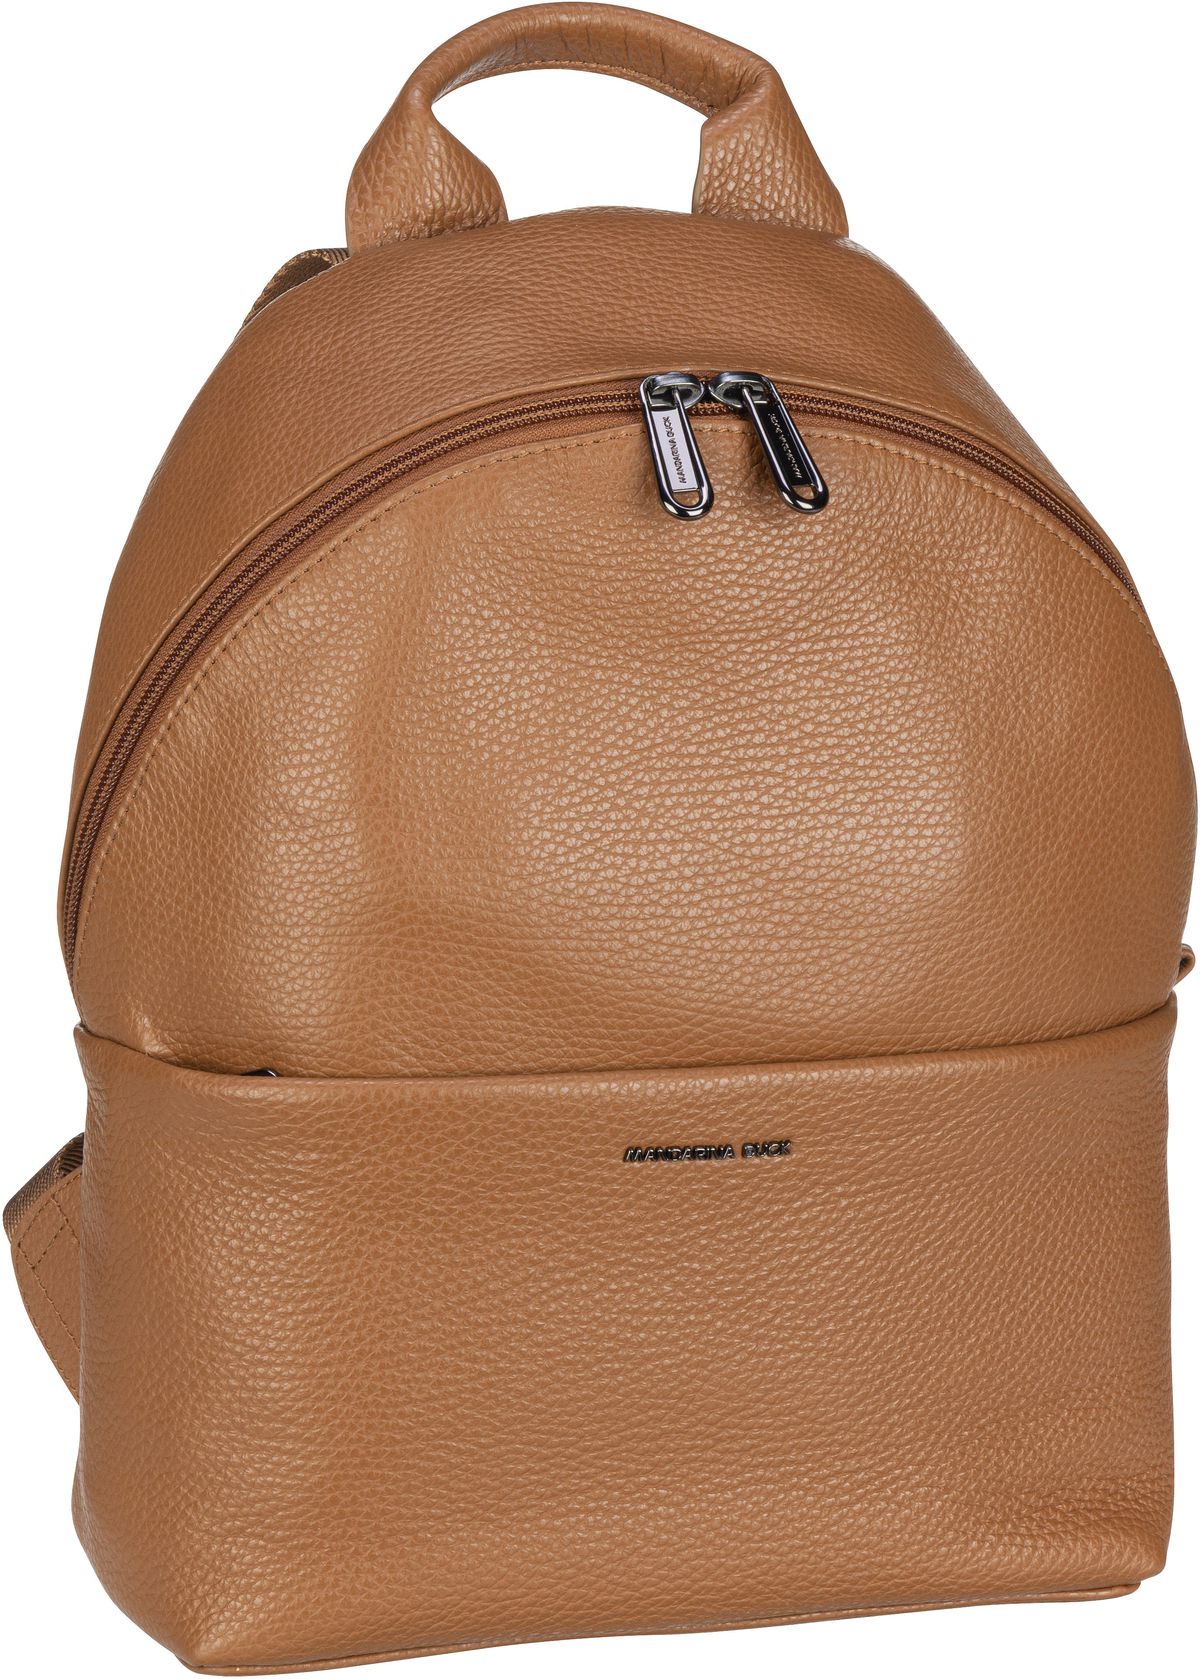 Mandarina Duck Mellow Leather Backpack FZT46 - Indian Tan